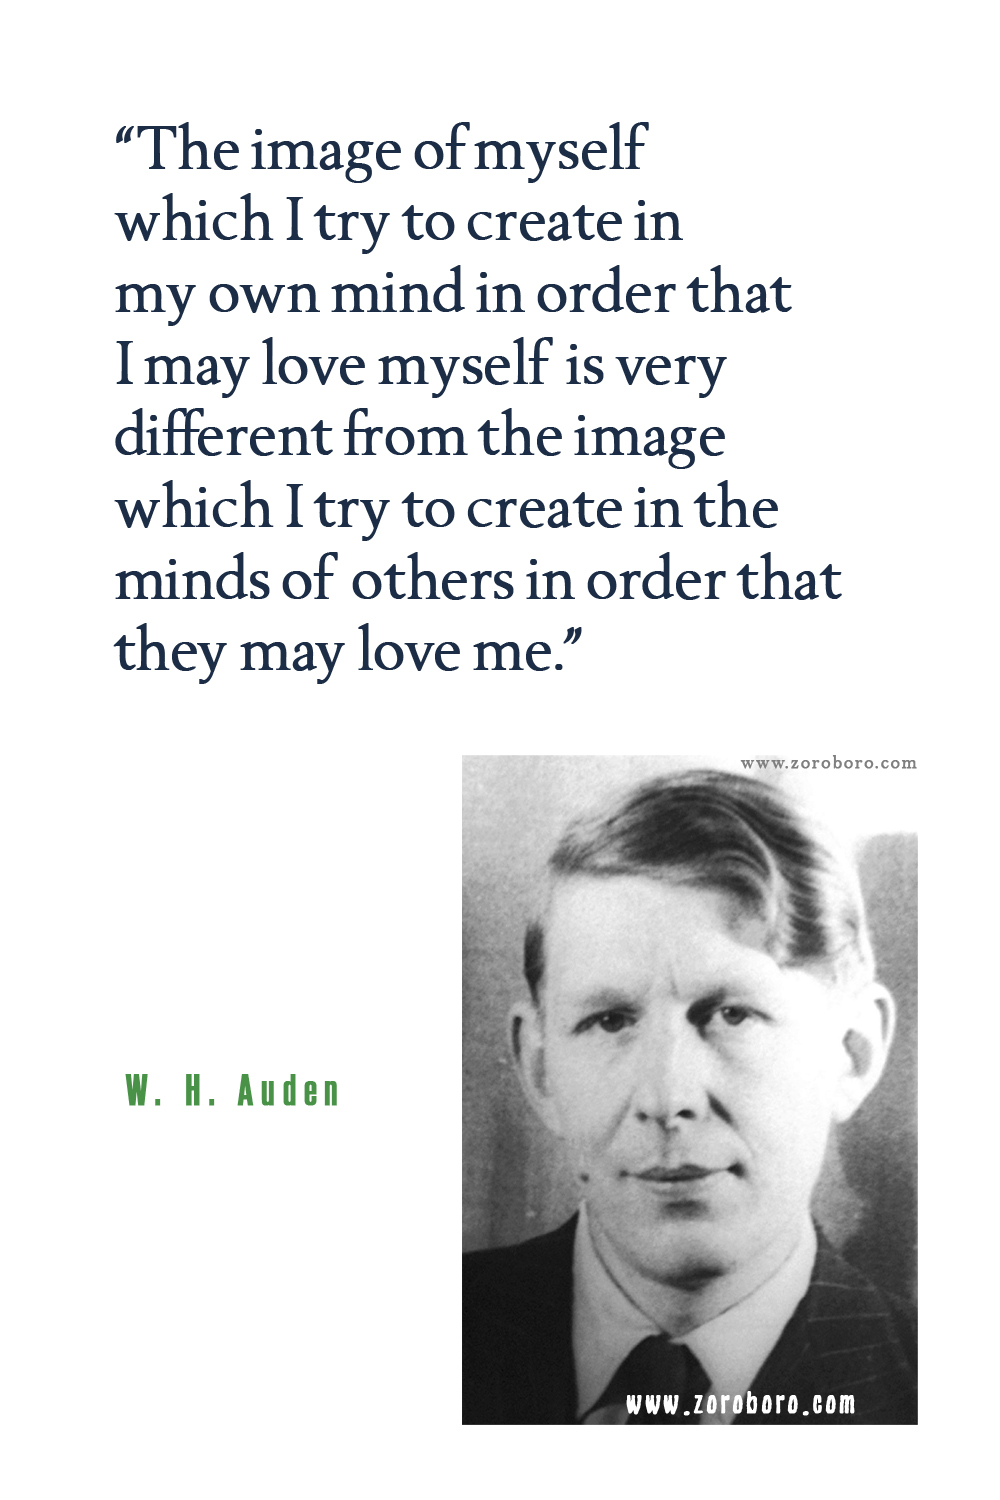 W.H. Auden Quotes, W.H. Auden Poet, W.H. Auden Poetry, W.H. Auden Poems, W.H. Auden Books Quotes, W.H. Auden Writings.